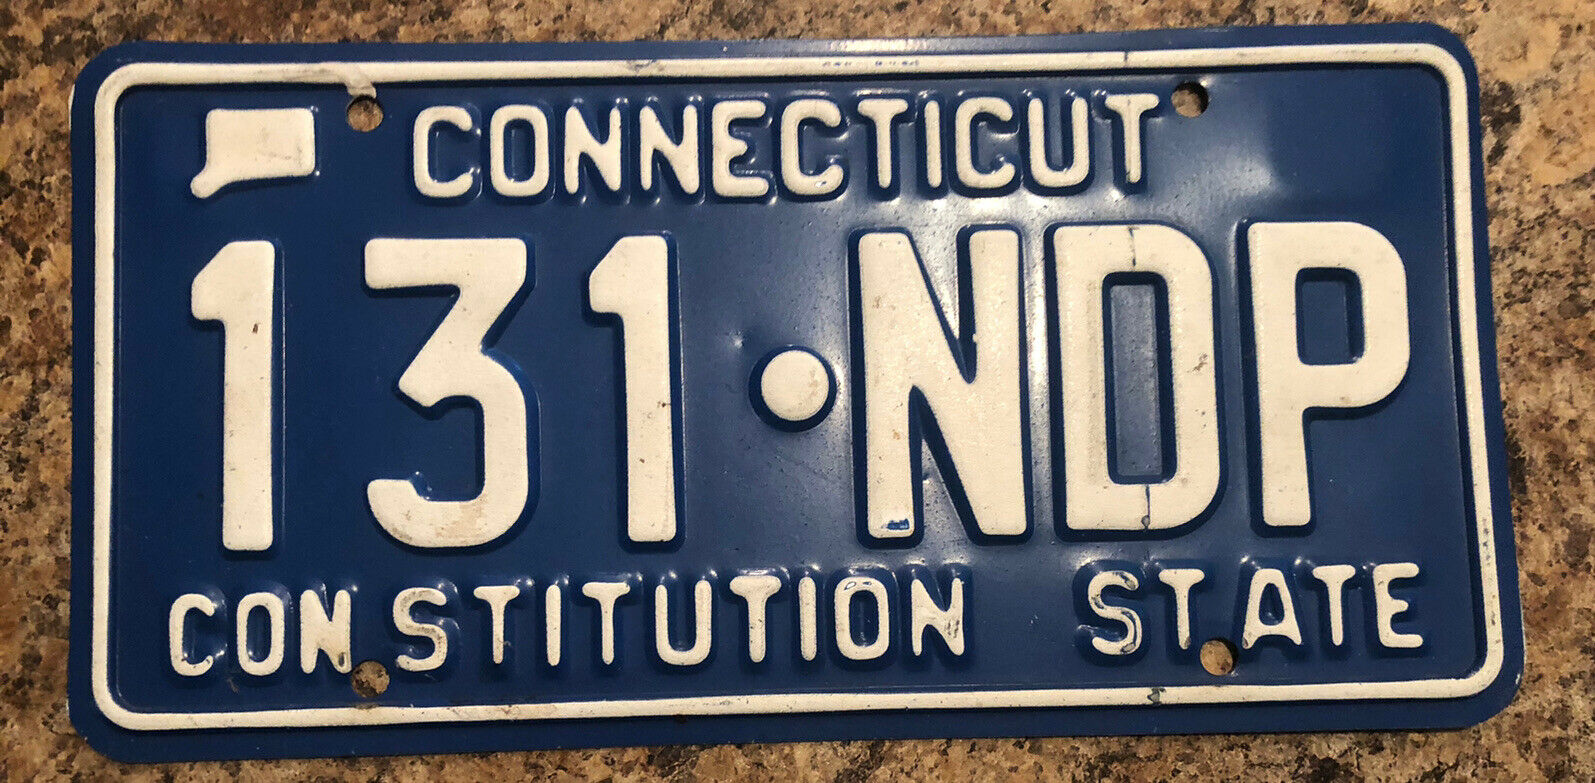 Connecticut Circa 1990s License Plate # 131•ndp